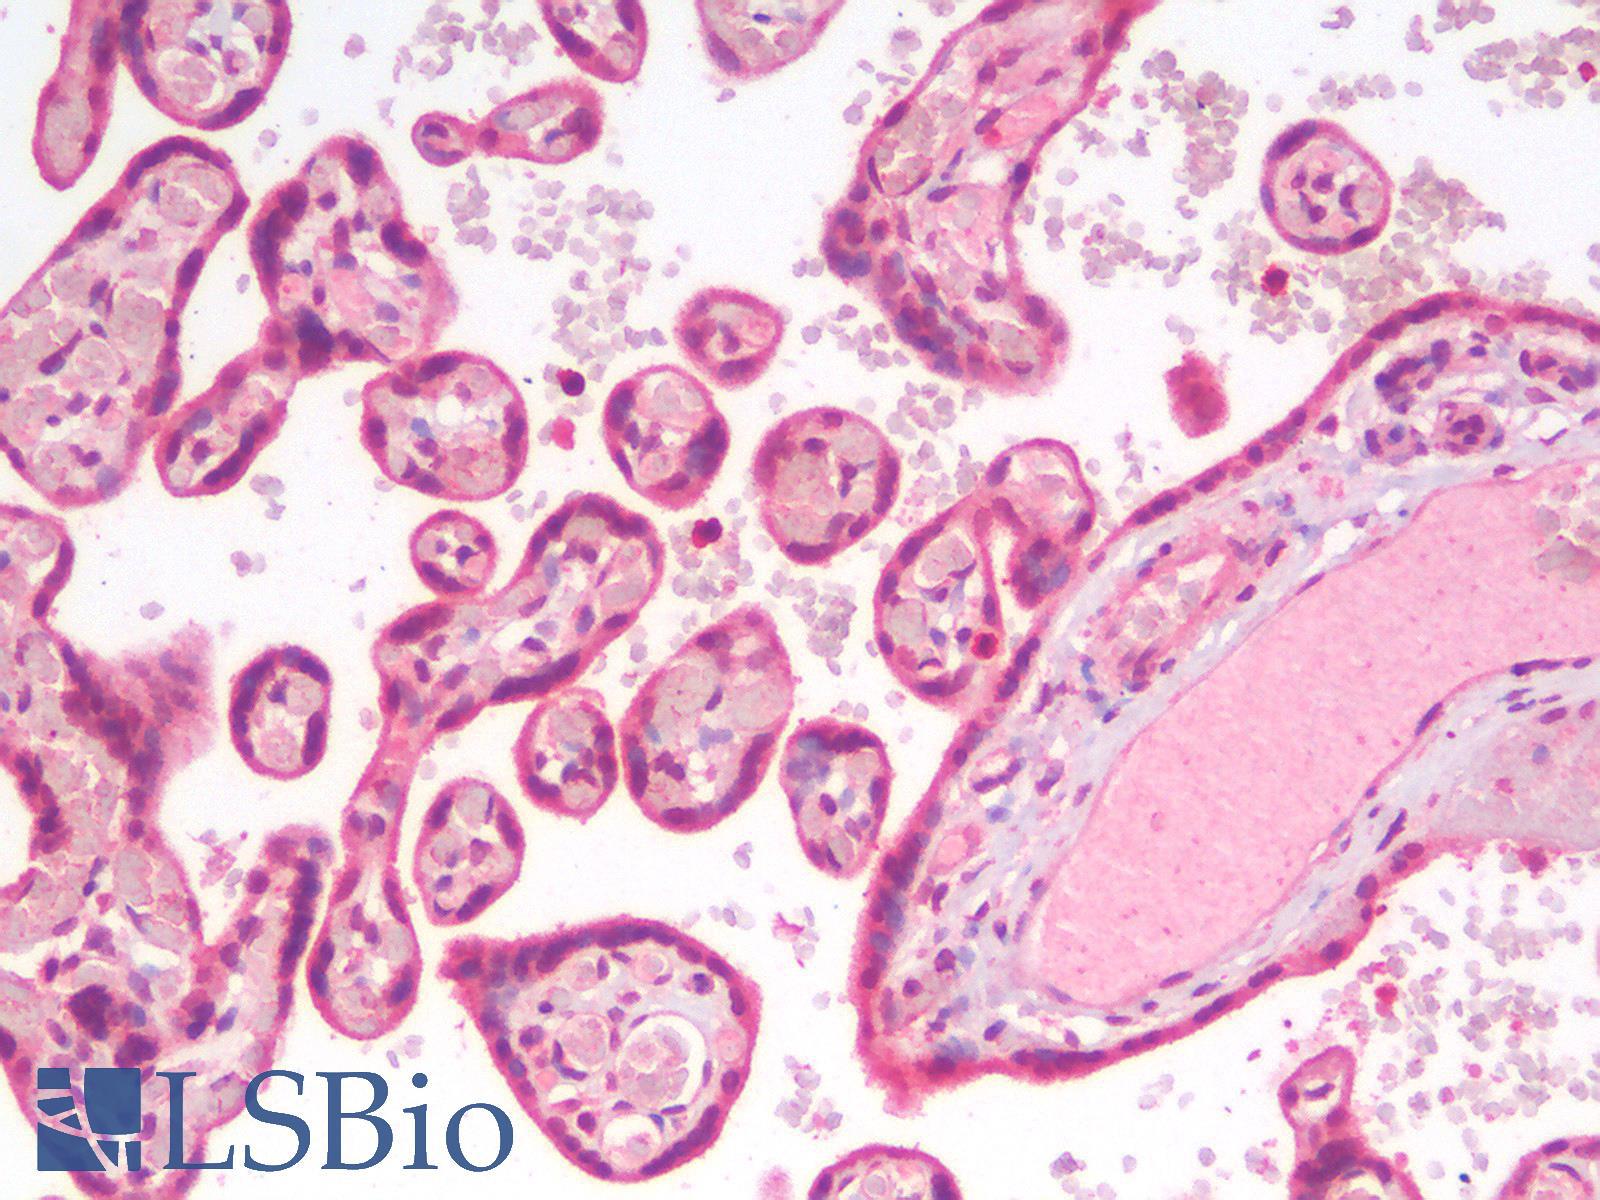 ERG Antibody - Human Placenta: Formalin-Fixed, Paraffin-Embedded (FFPE)